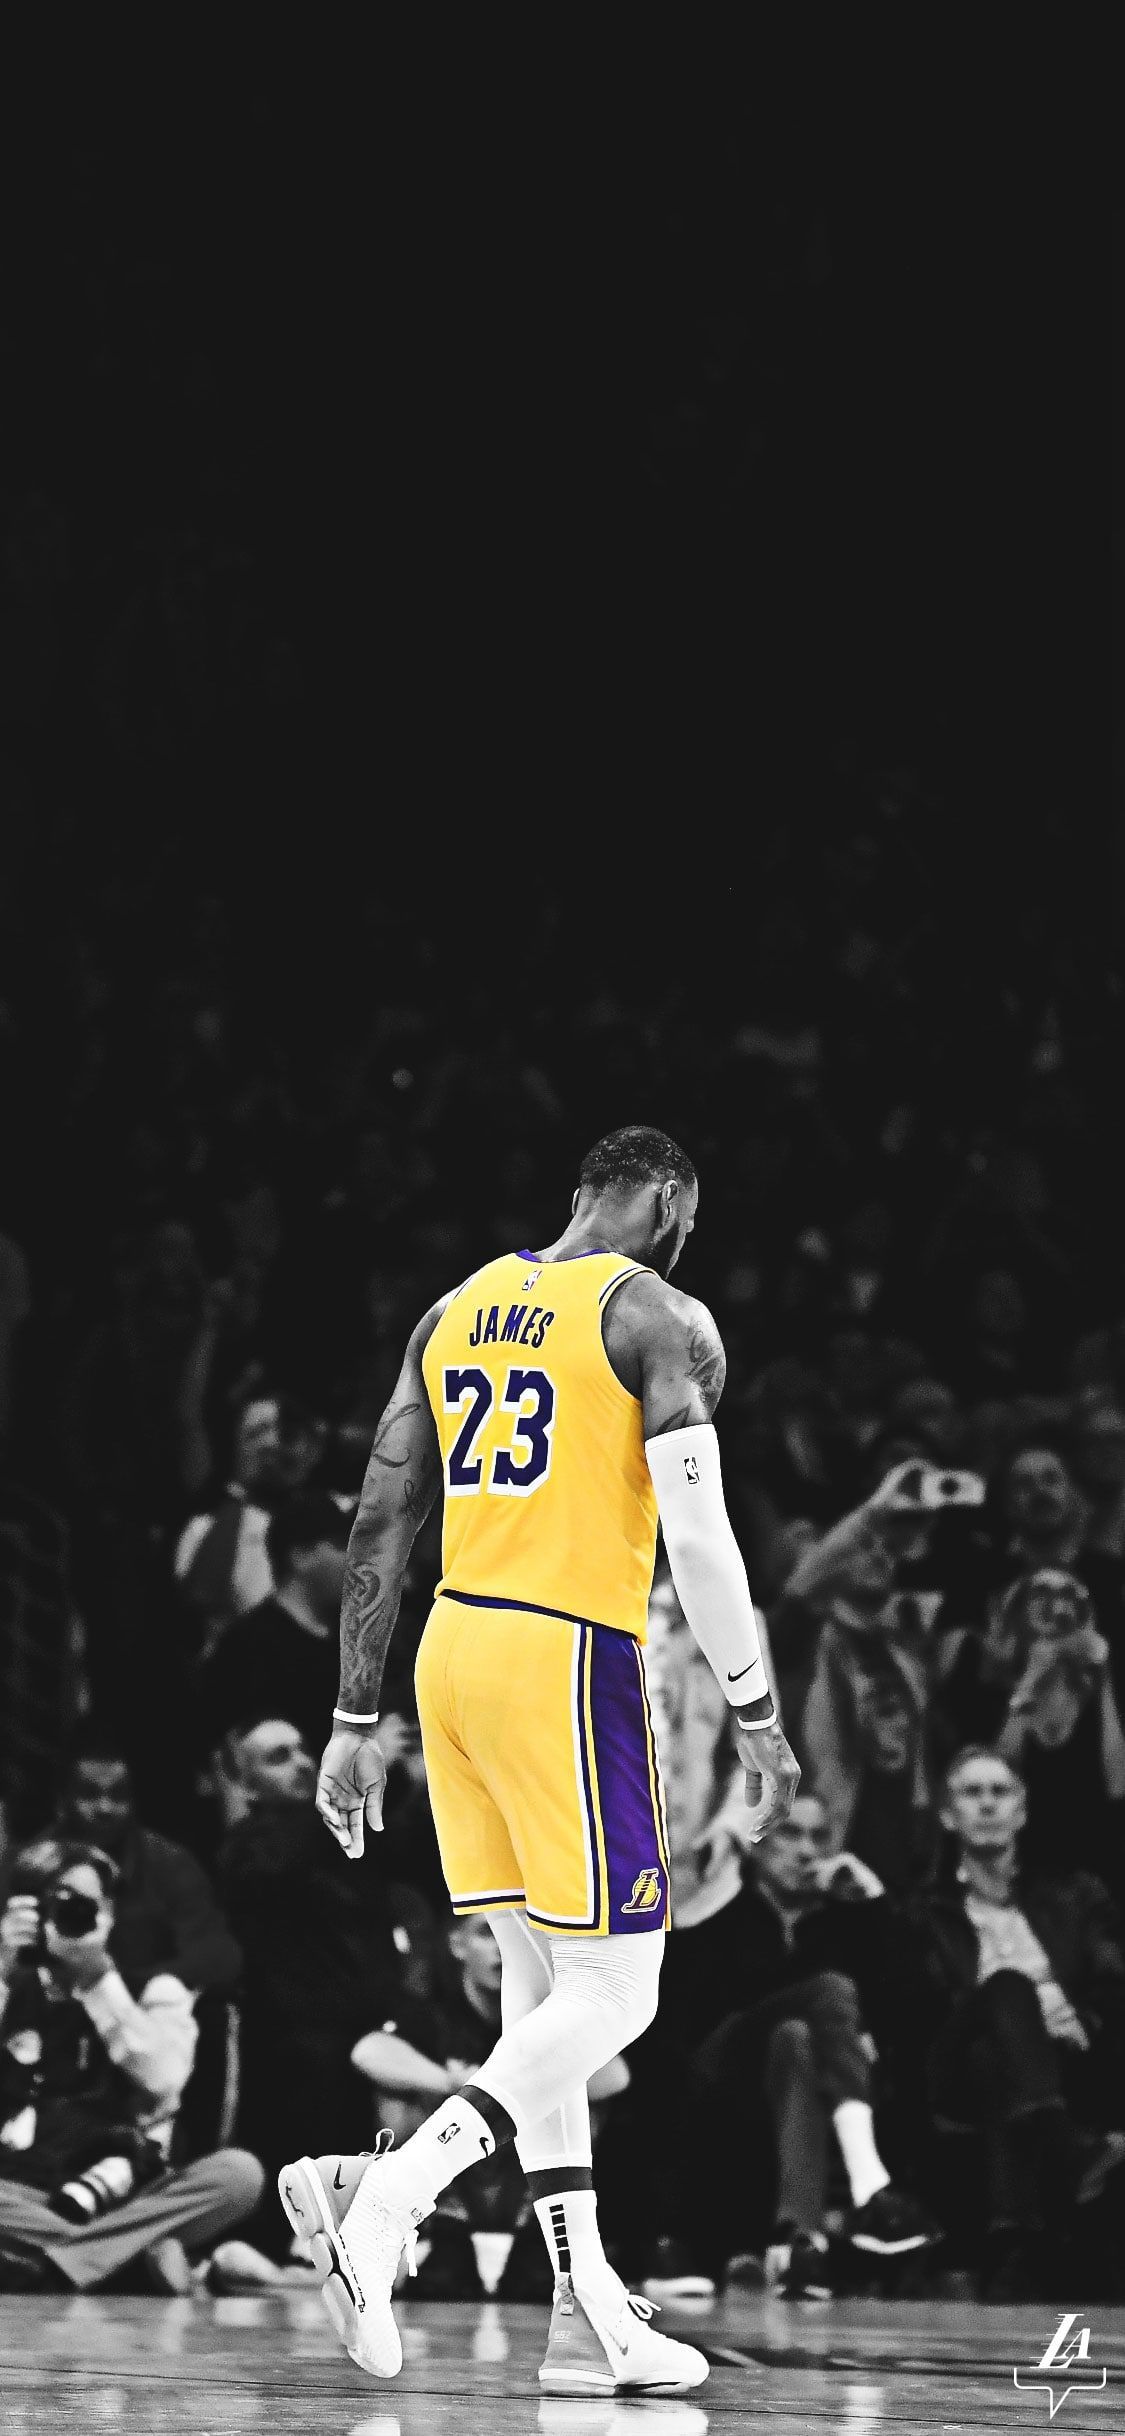 Lakers Wallpaper and Infographics. Lebron james lakers, Lebron james wallpaper, Lakers wallpaper